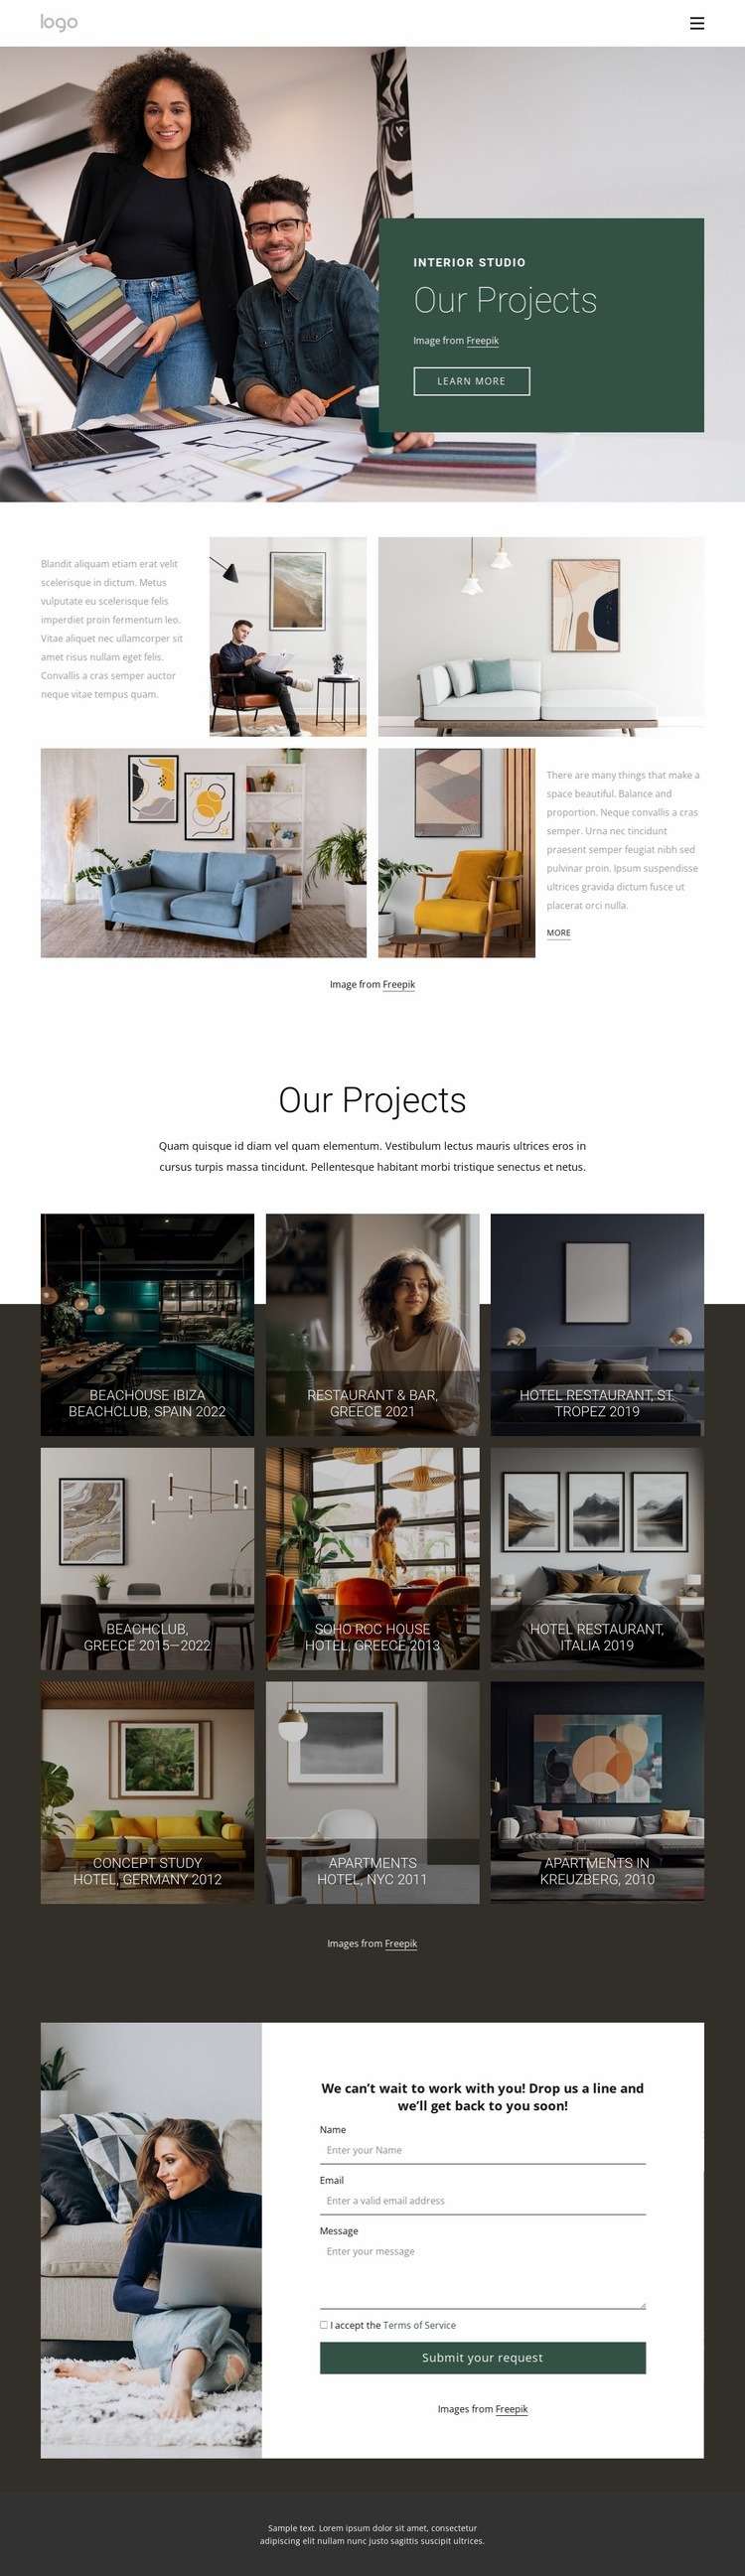 Interior and lighting design Web Page Design